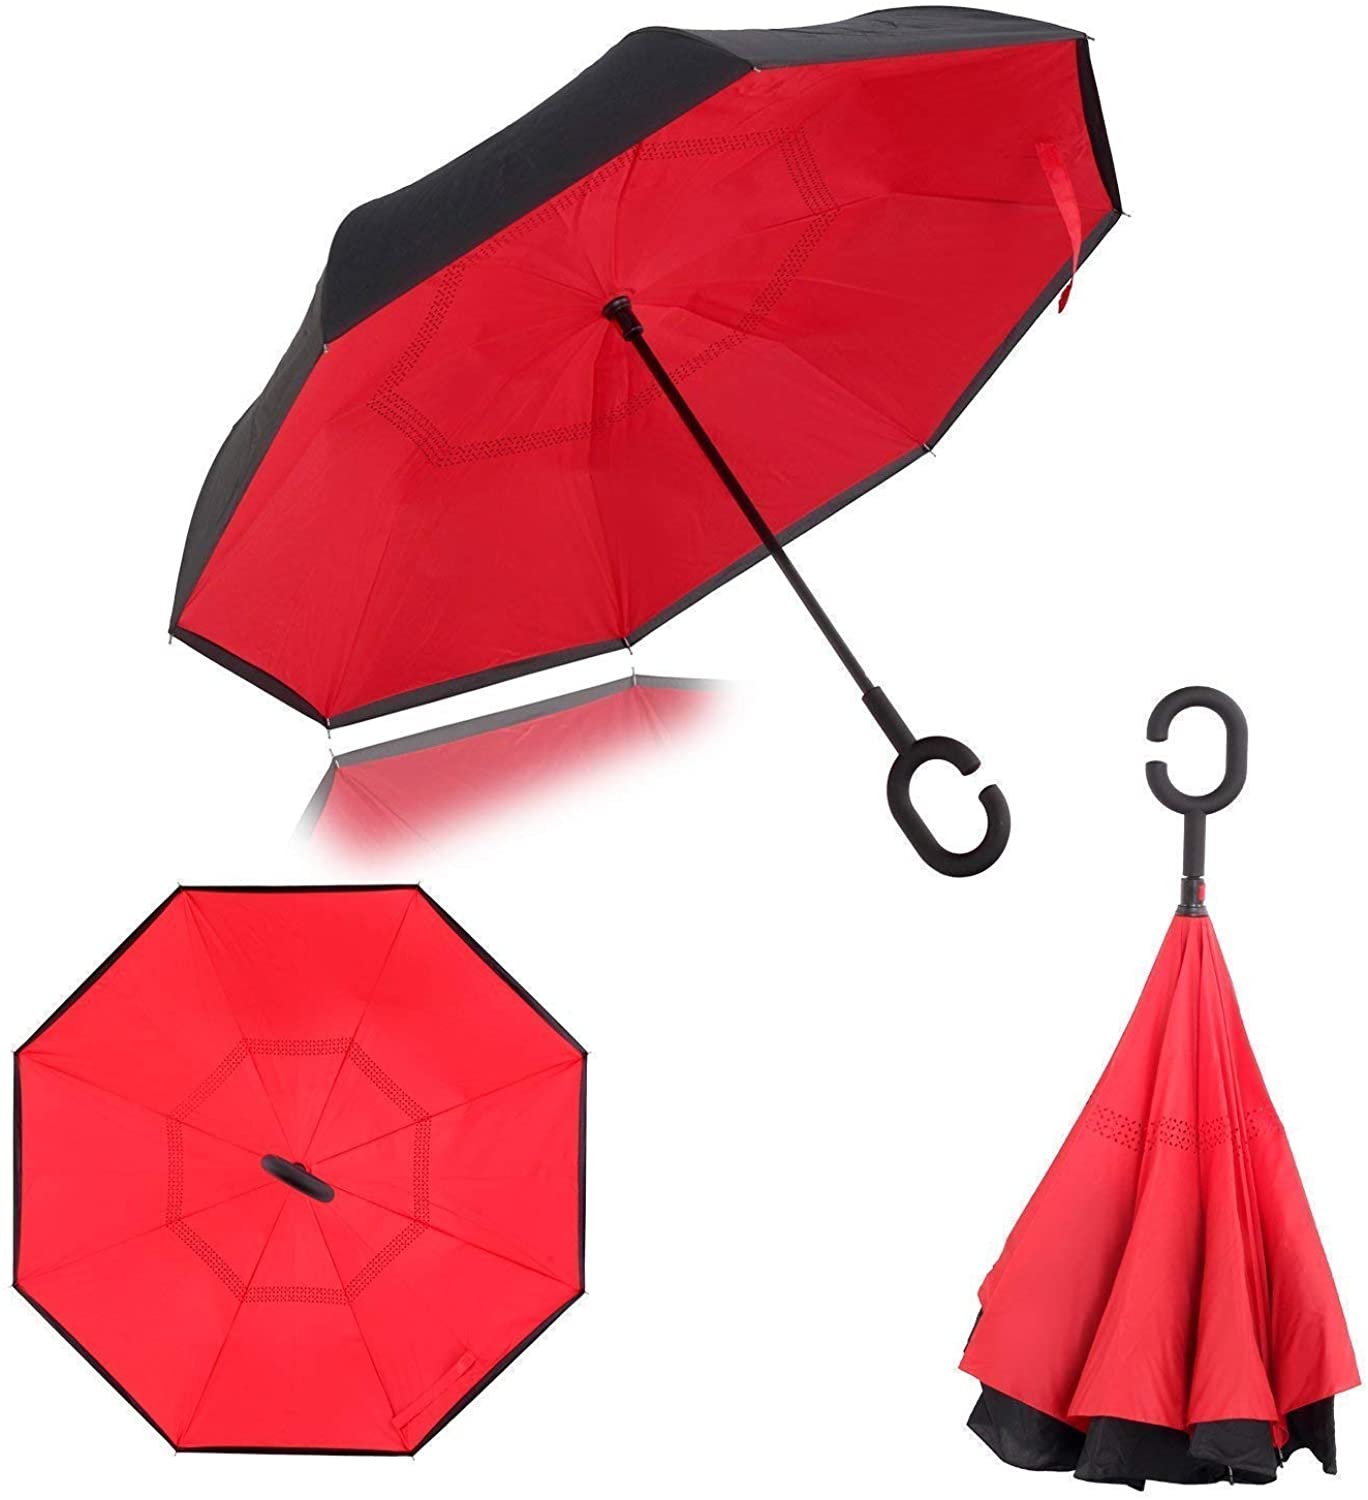 SKYTONE Reverse Travel C Type Handle Double Layer Umbrella (Red)